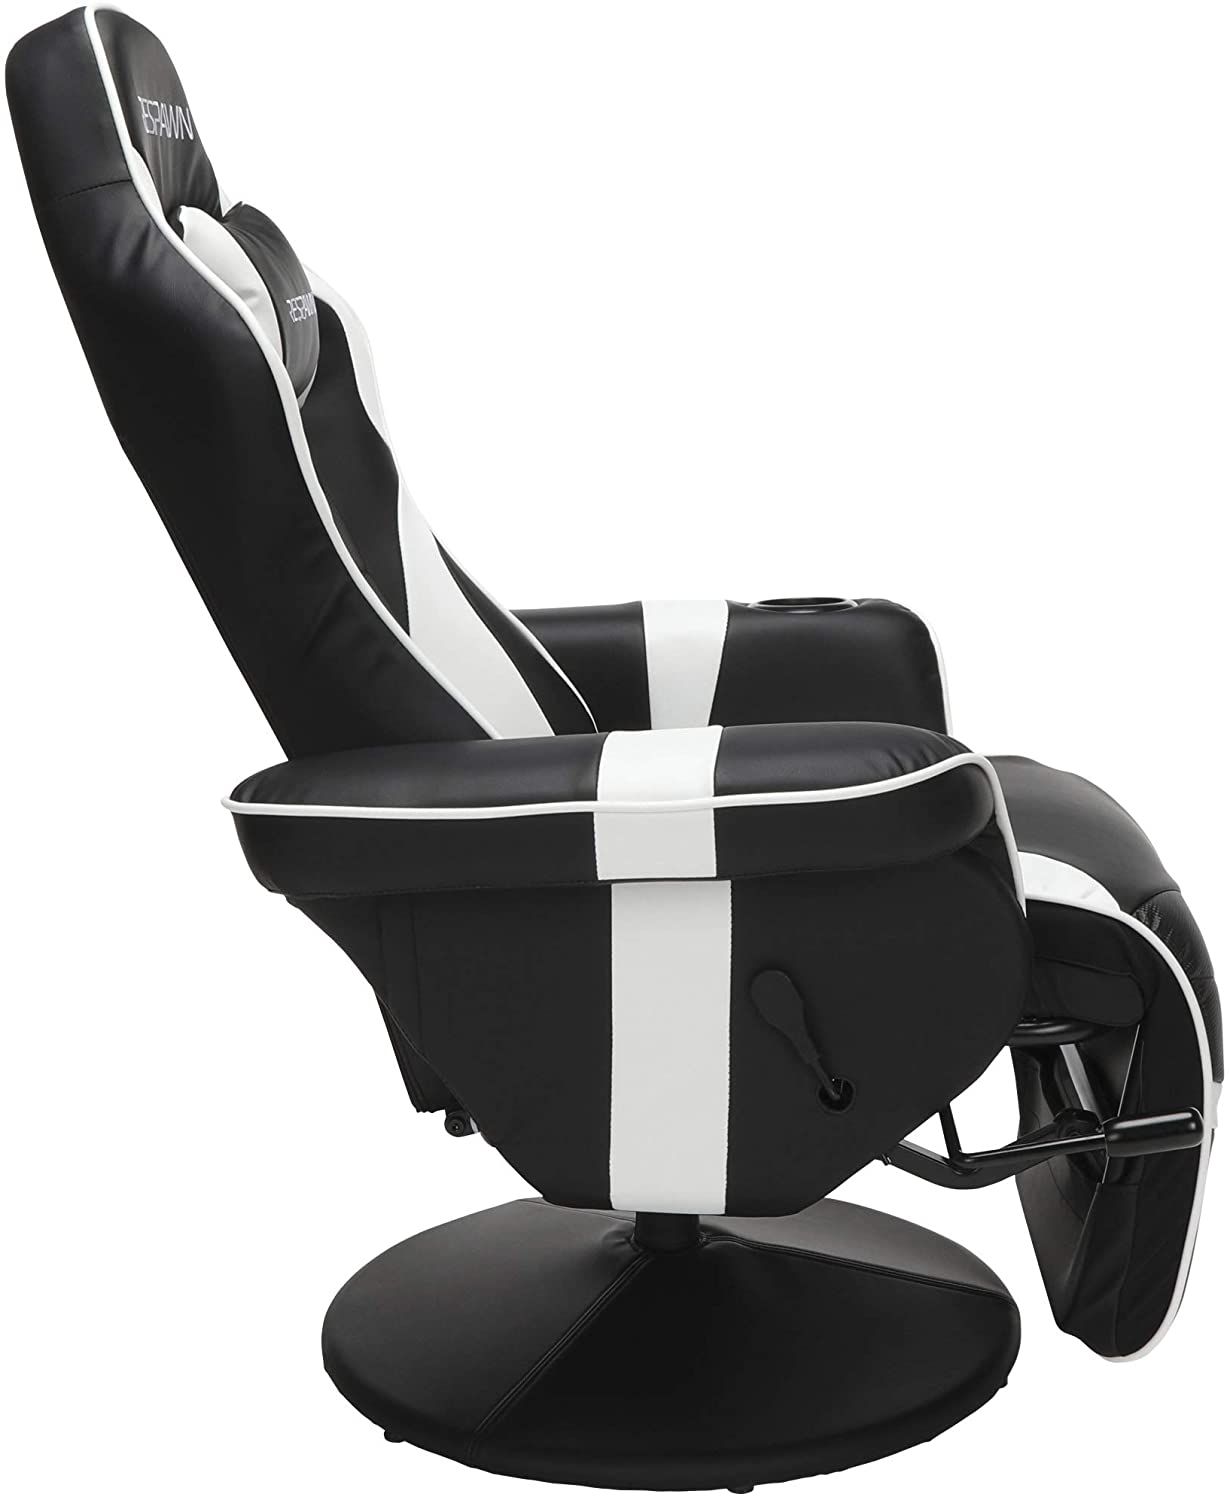 Respawn 900 Gaming Chair recline